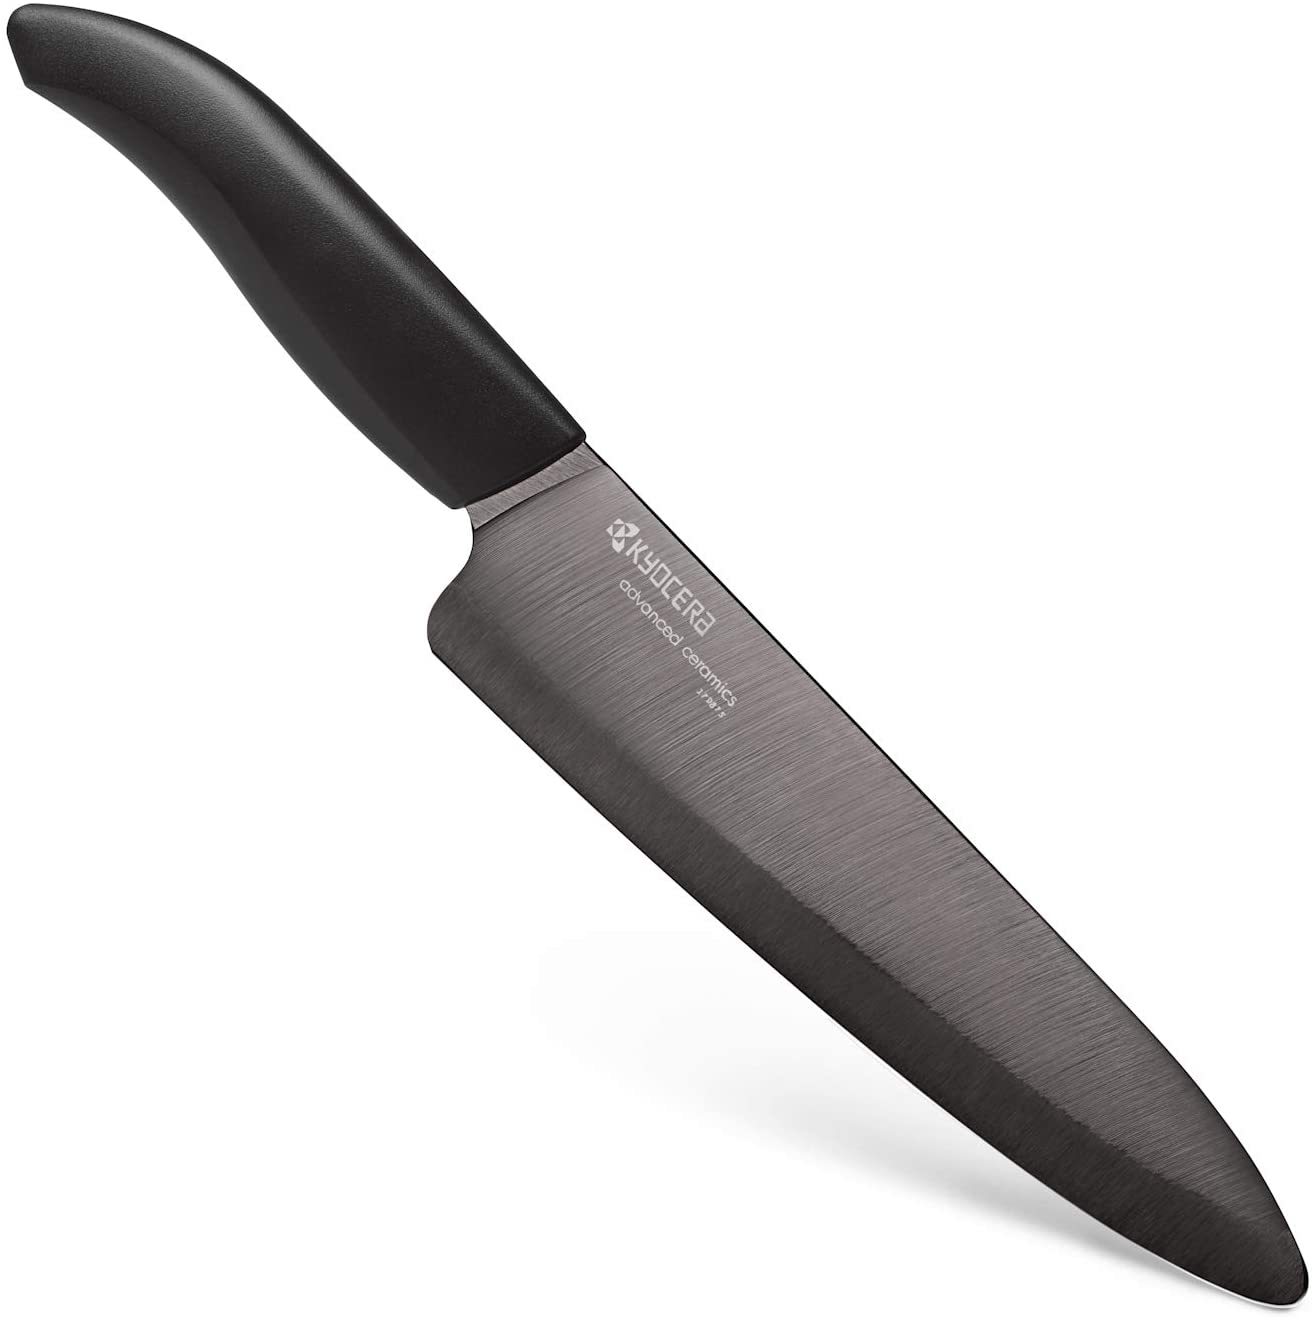 Kyocera Advanced Ceramic Revolution Series 7-inch Professional Chef’s Knife, Black Blade